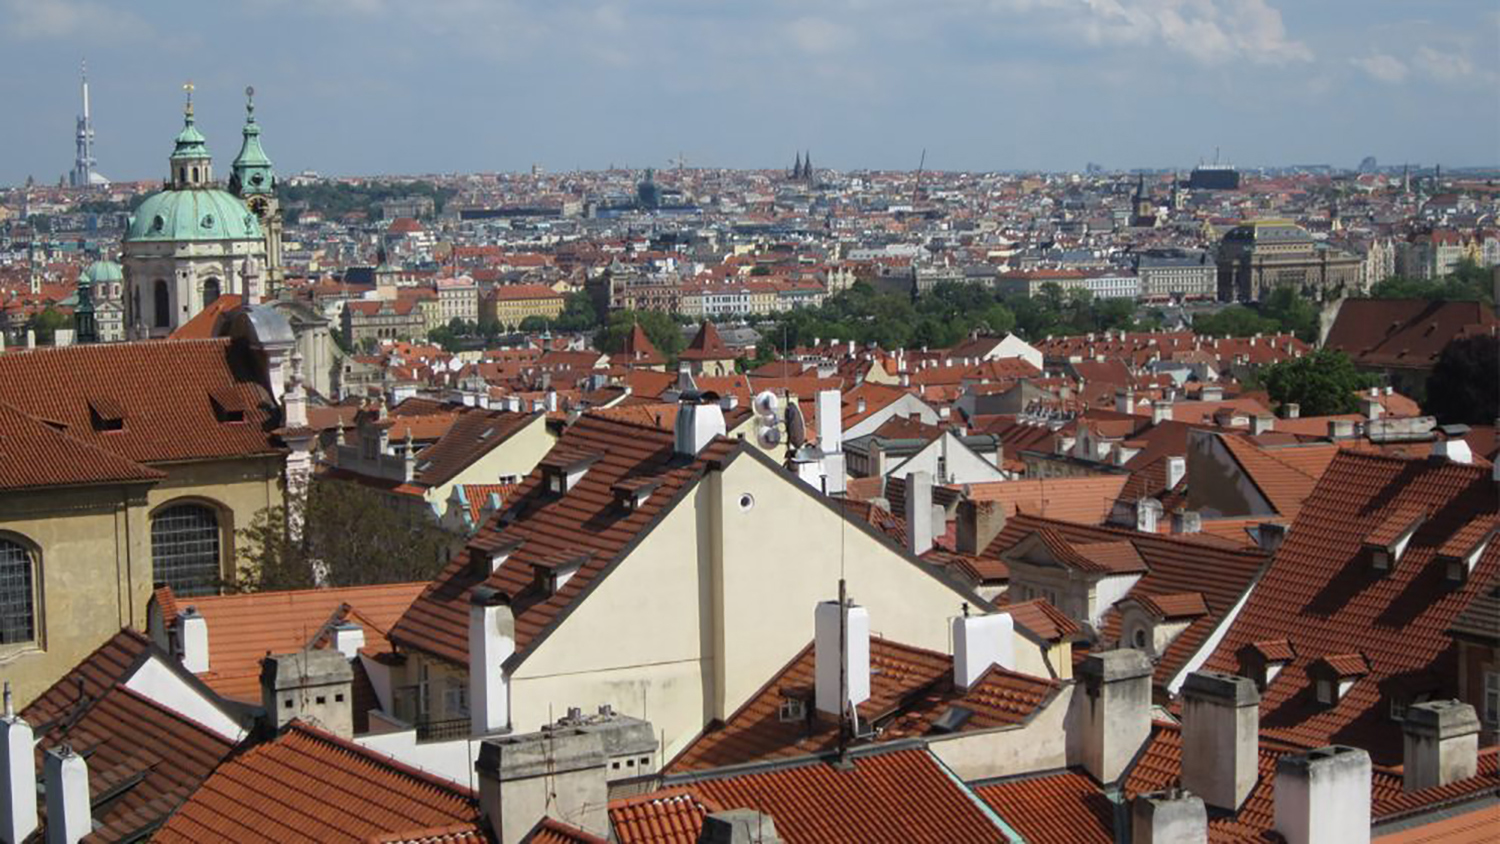 Skyline of the city of Prague, Czech Republic